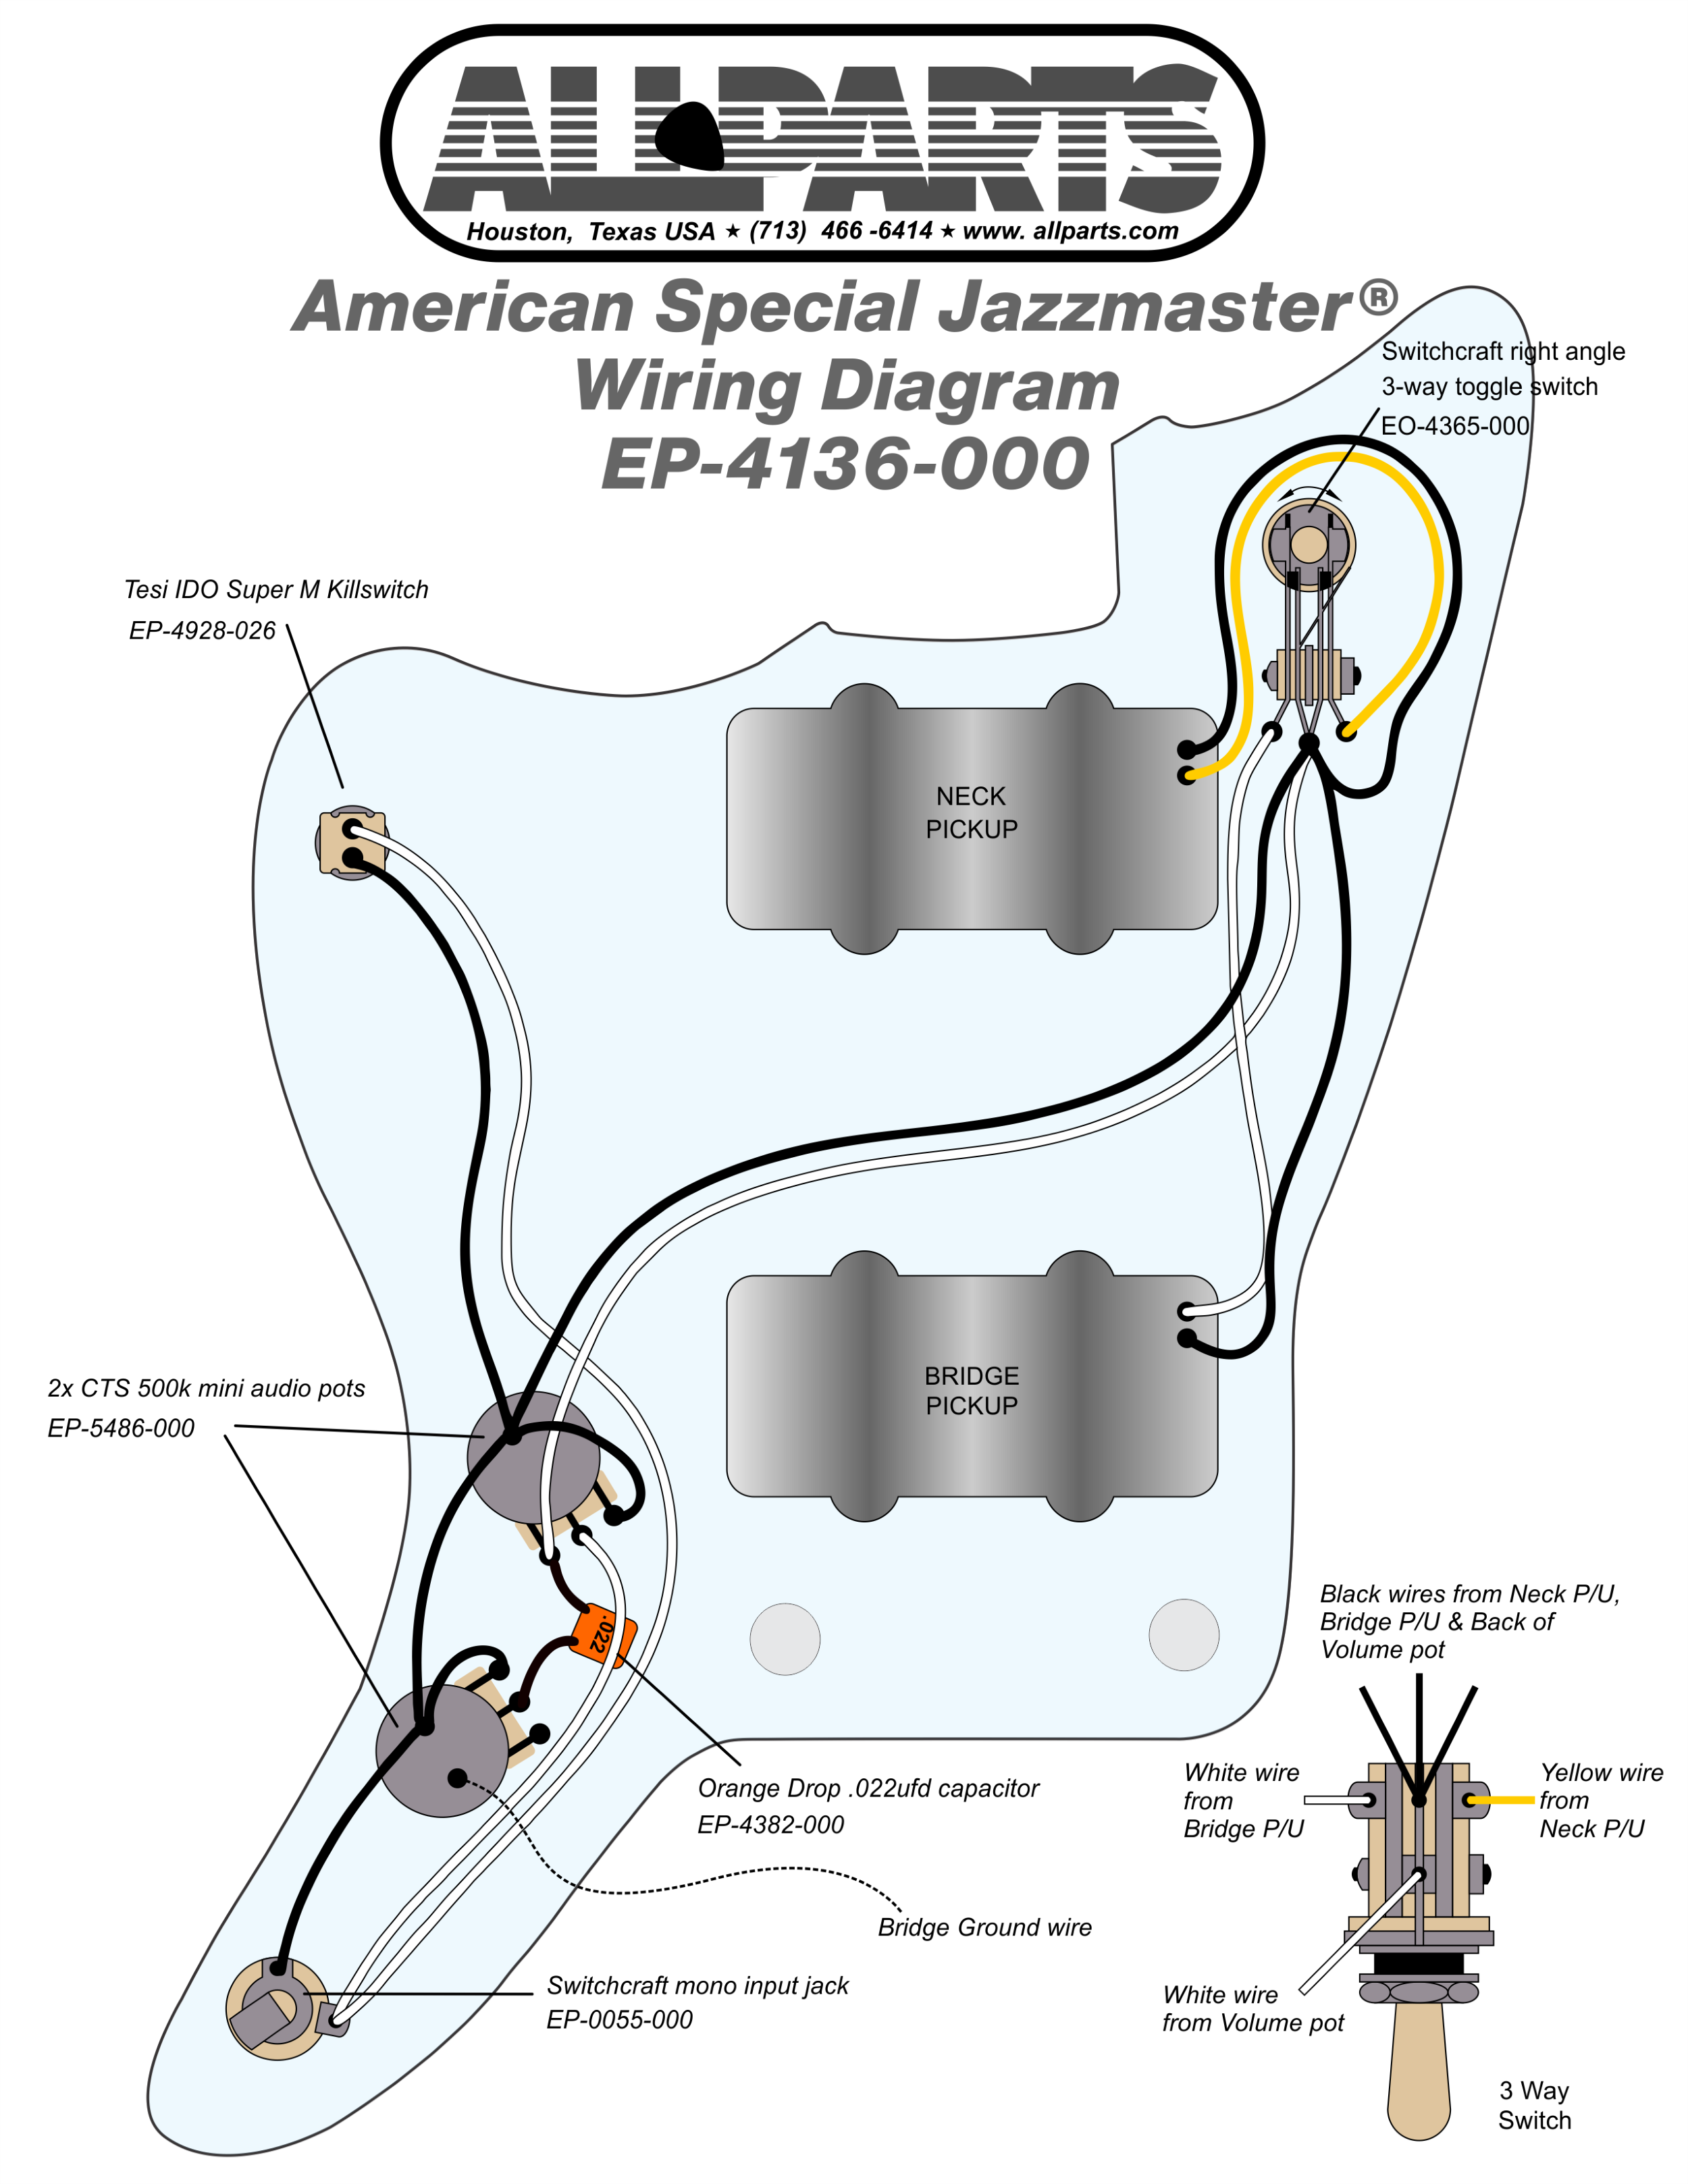 American Special Jazzmaster Wiring Diagram